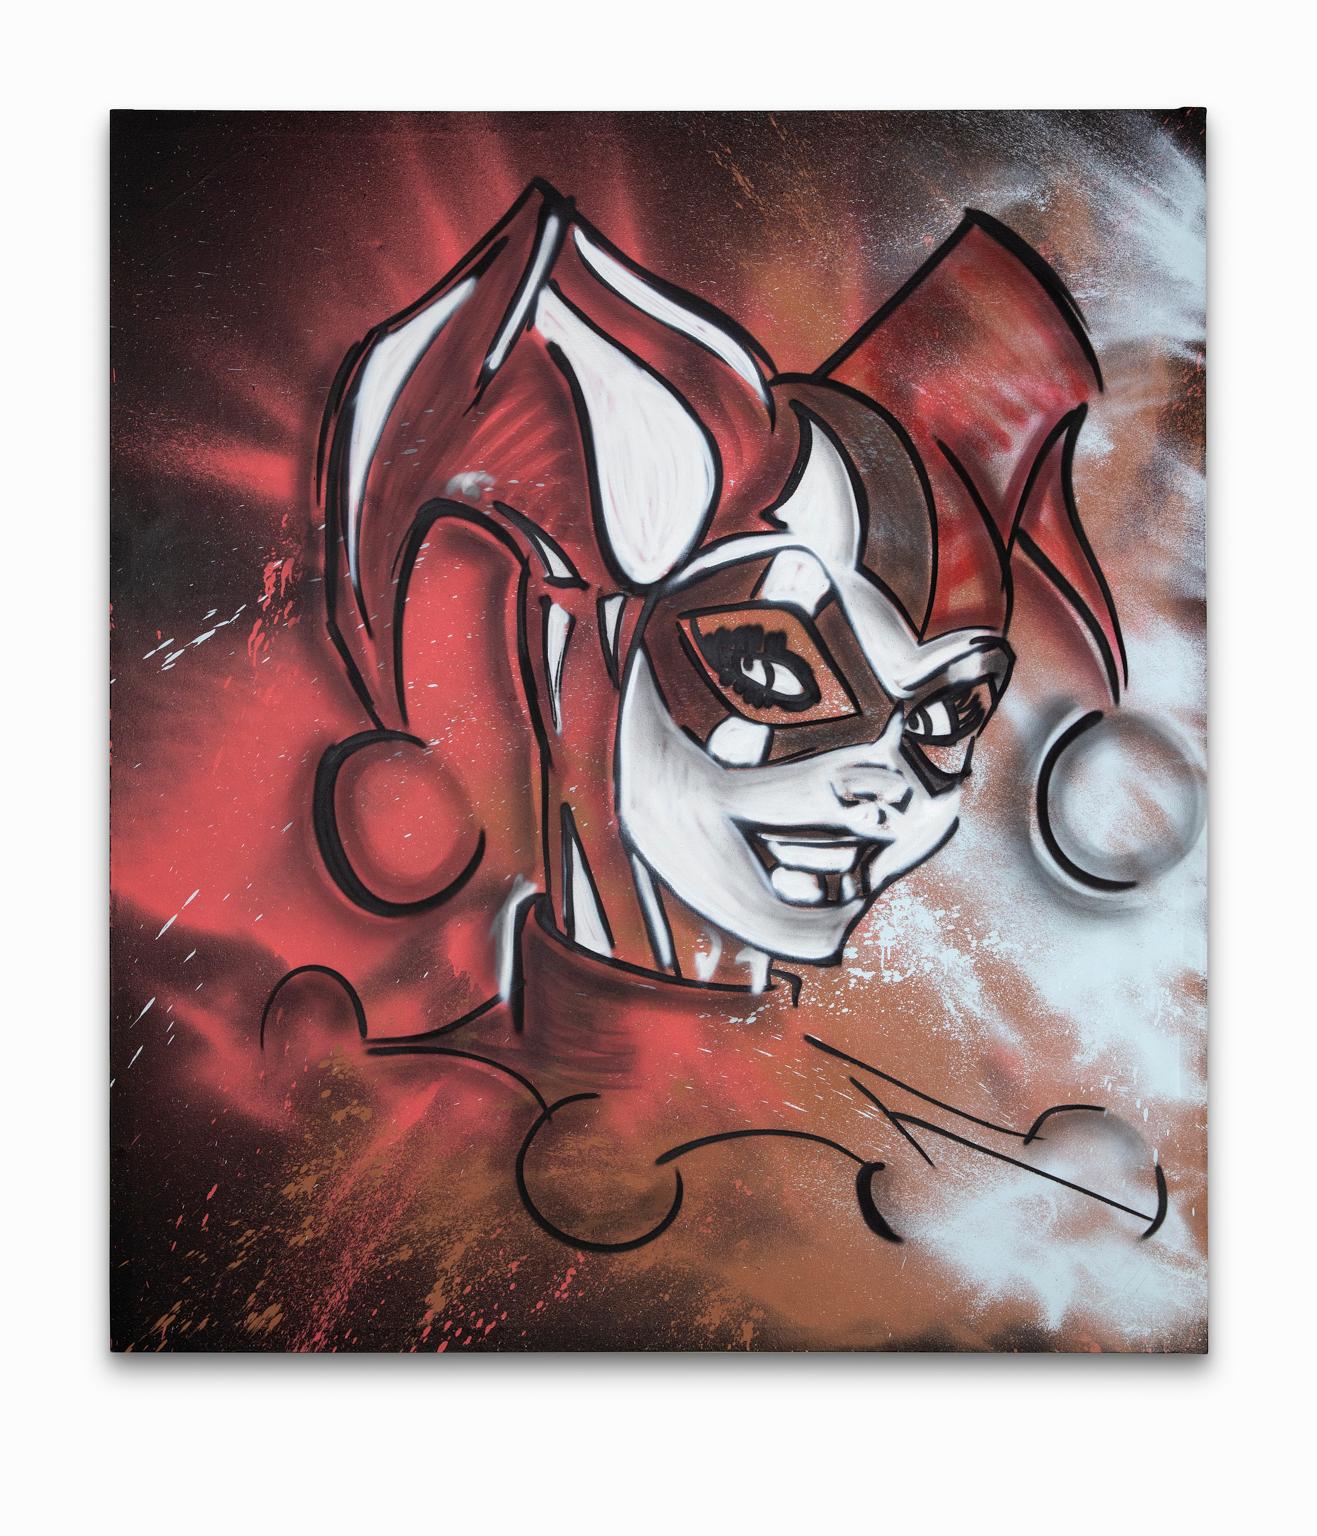 Antonio “Shades” Agee Figurative Painting - Antonio Shades Agee "Harley" Graffiti/Street Art Style Spray Paint